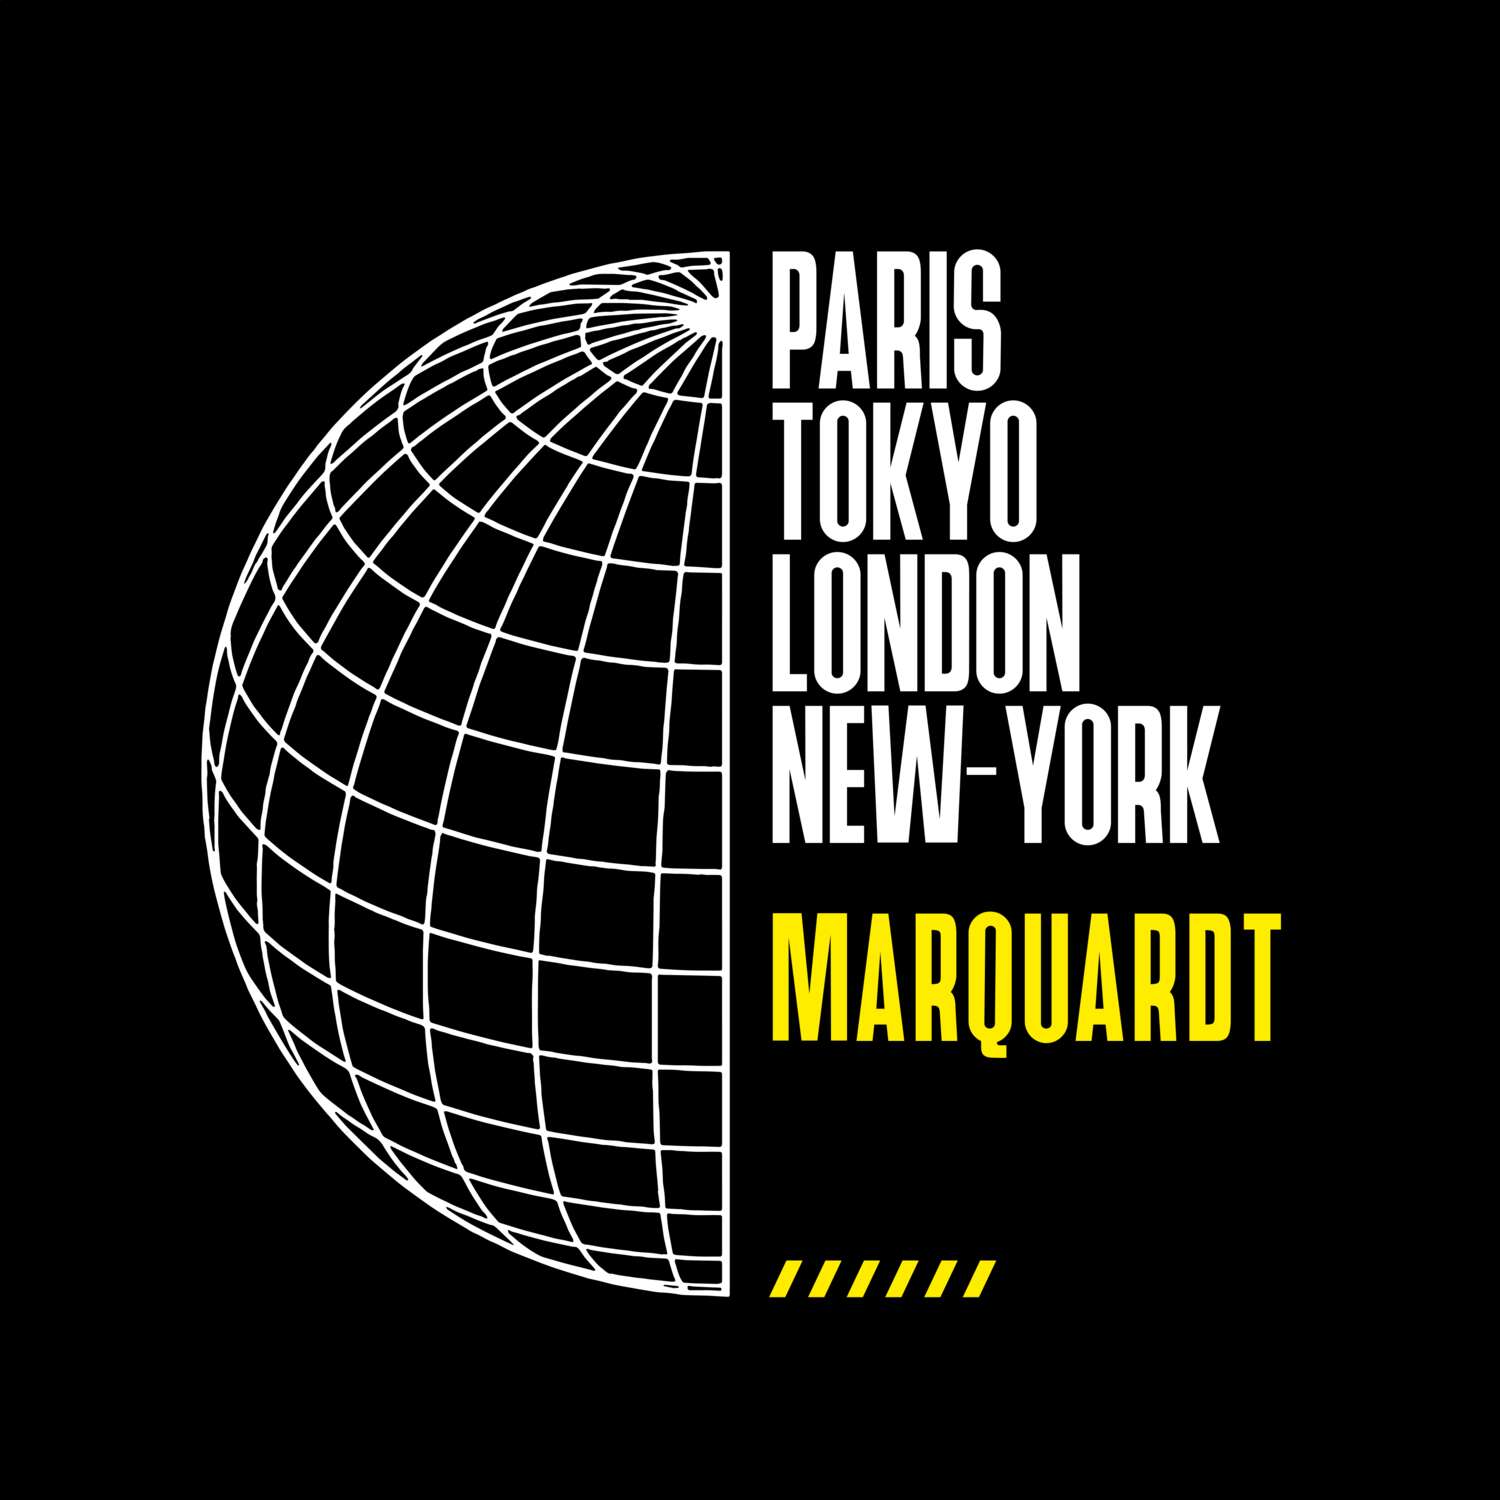 Marquardt T-Shirt »Paris Tokyo London«